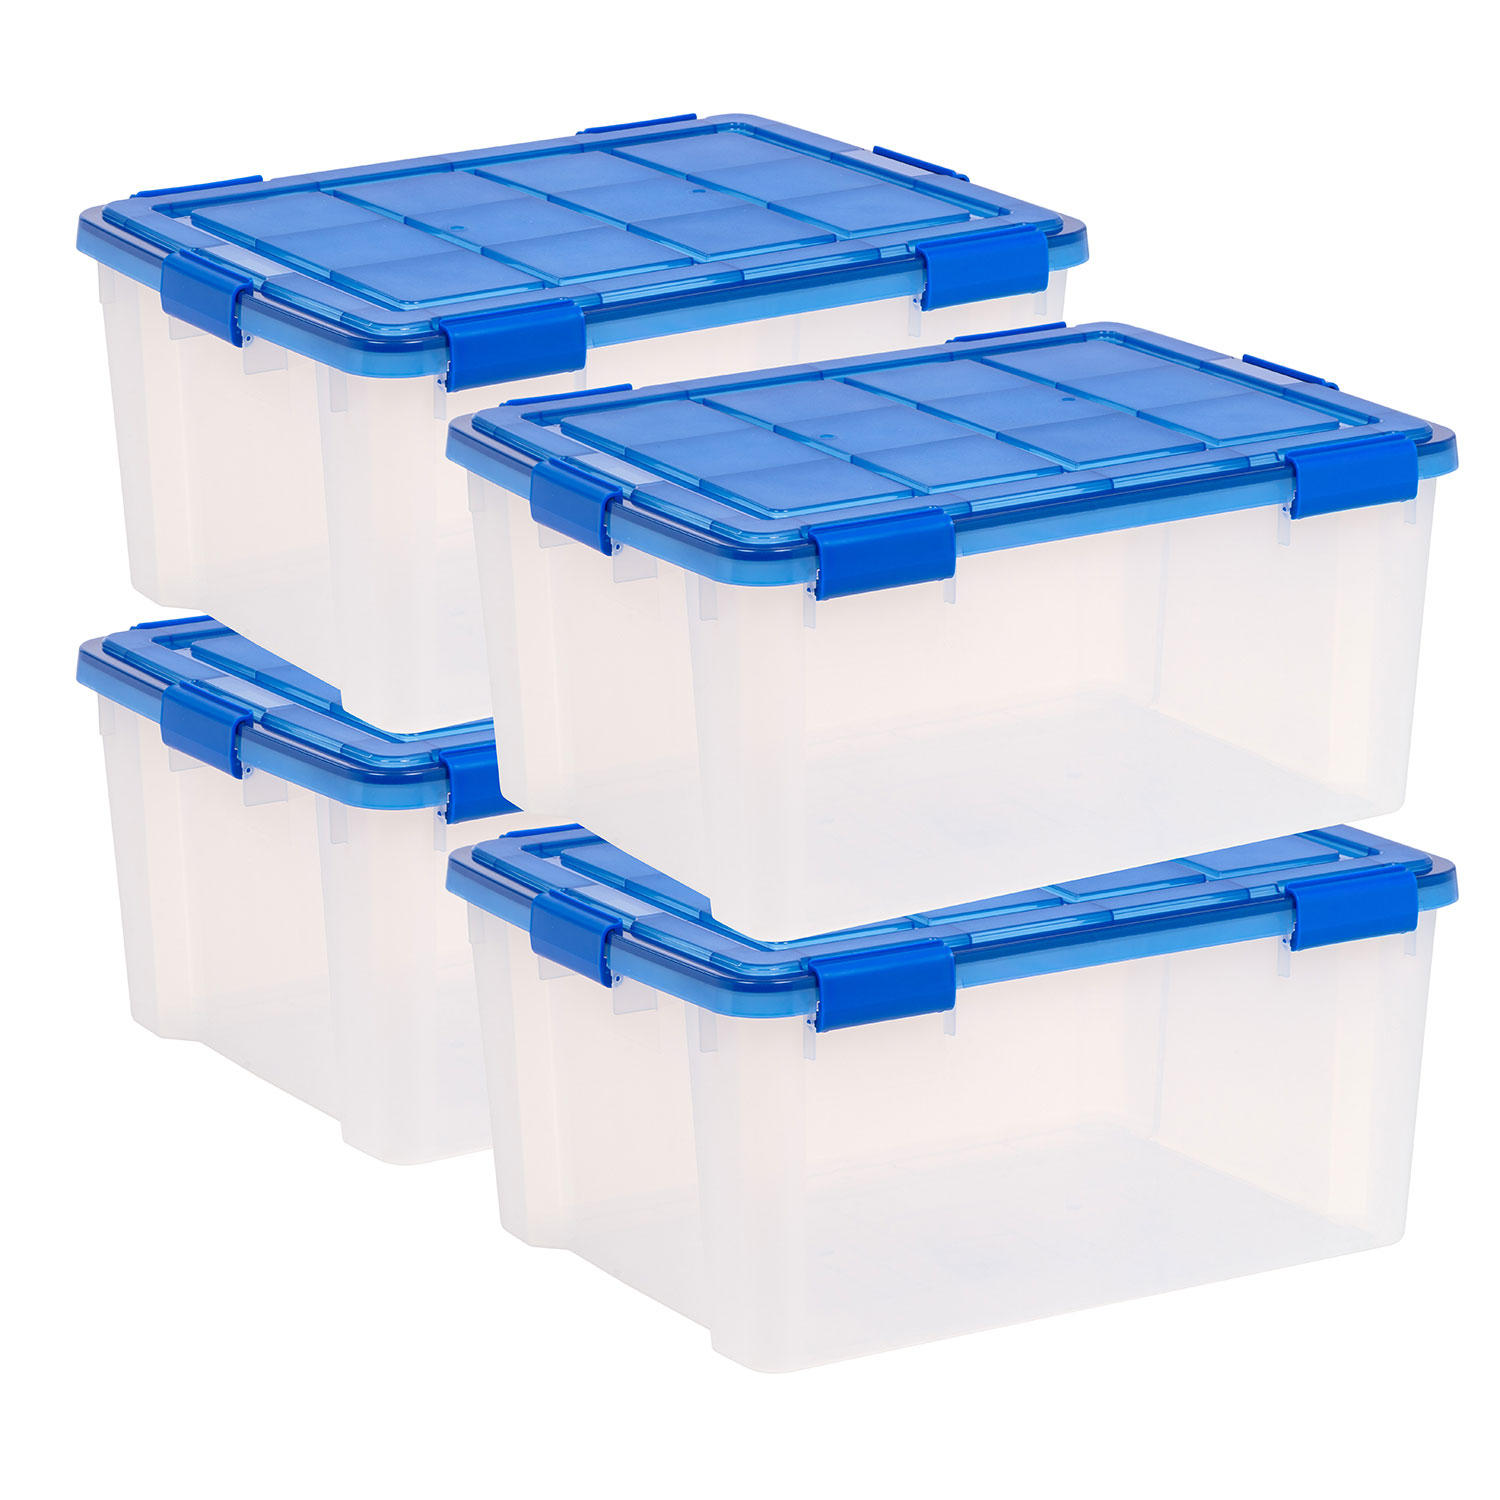 IRIS USA, 60 Quart WeatherPro™ Gasket Clear Plastic Storage Box with Lid, Blue, Set of 4